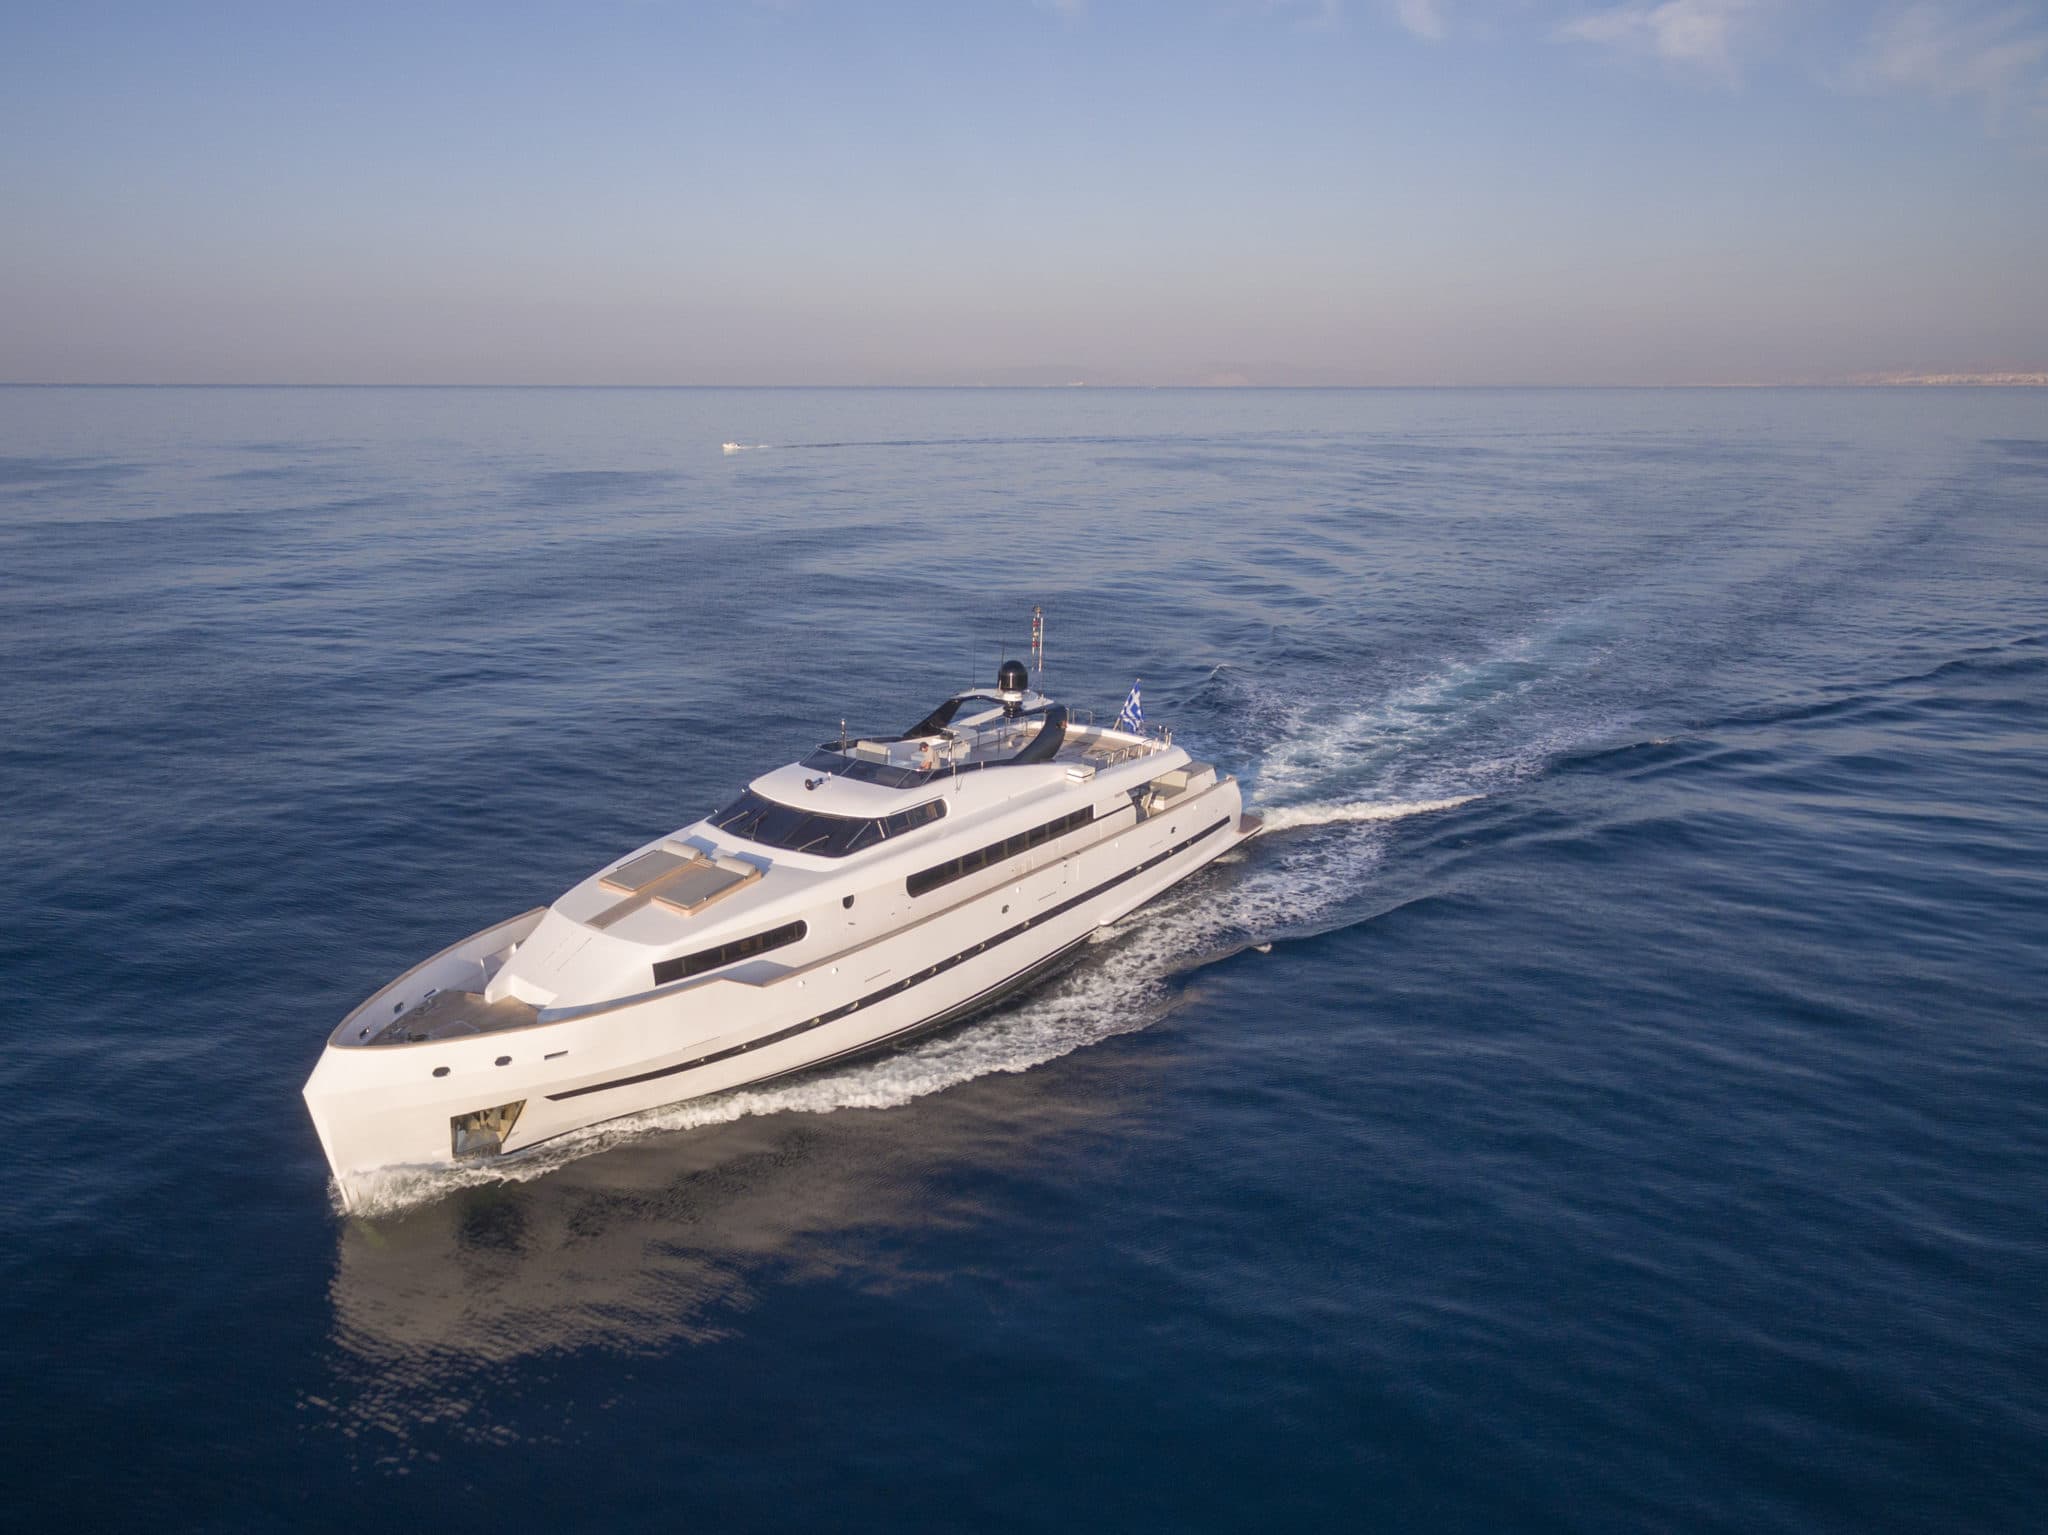 greek yacht sales limited